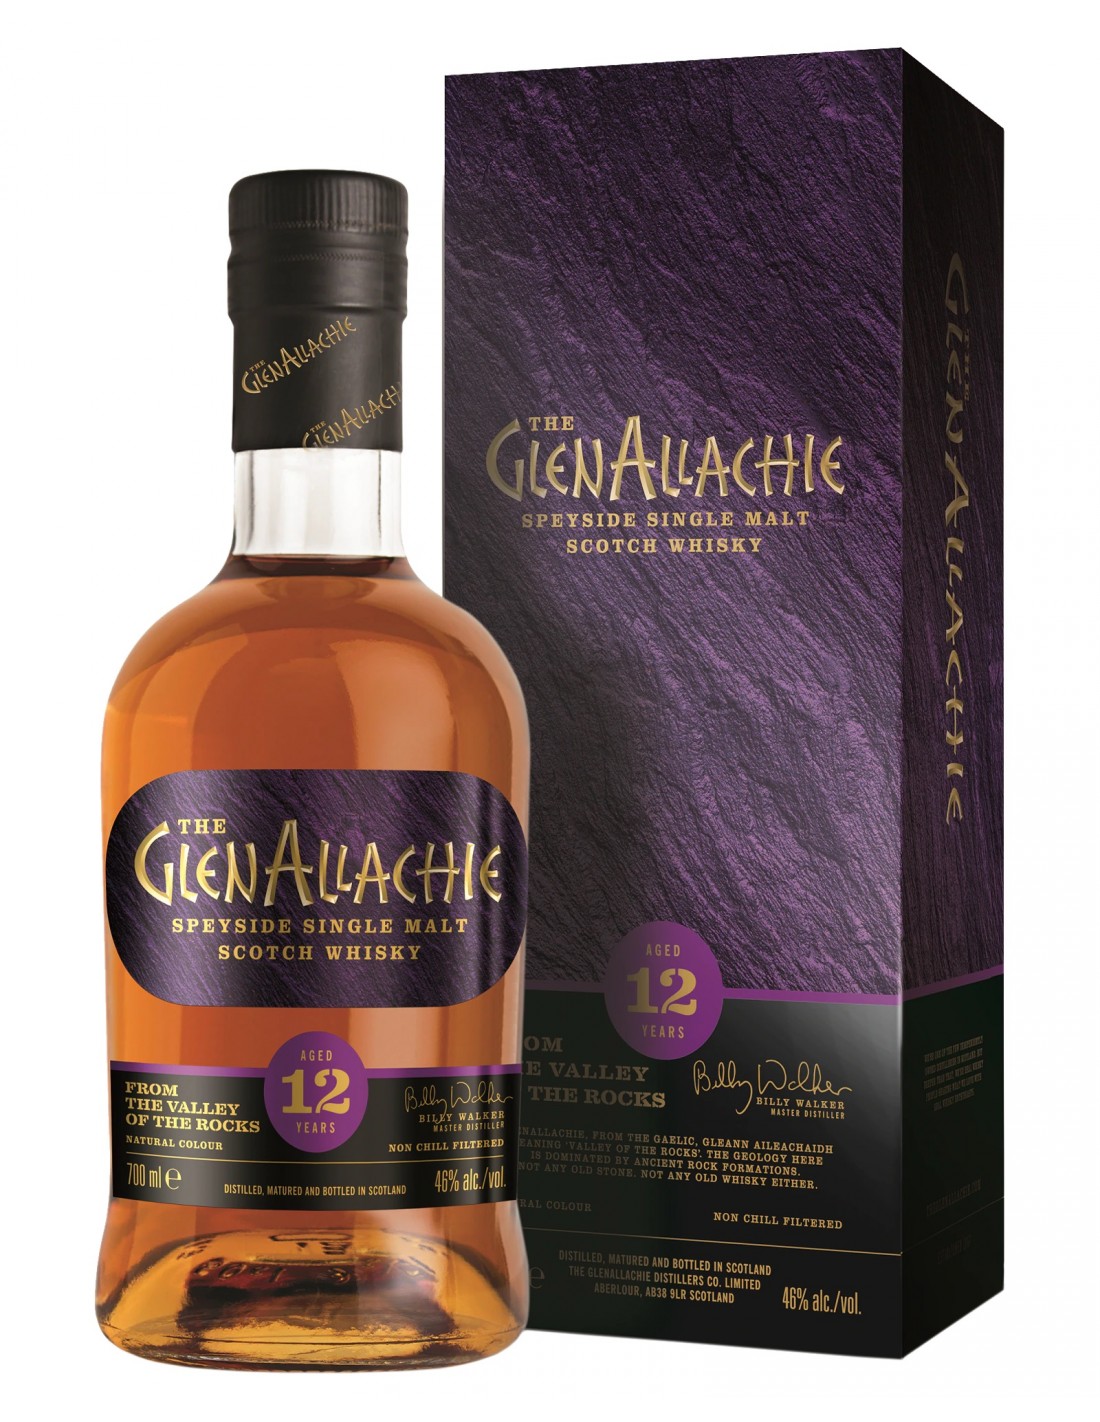 Whisky GlenAllachie Single Malt 0.7L, 12 ani, 46% alc., Scotia alcooldiscount.ro